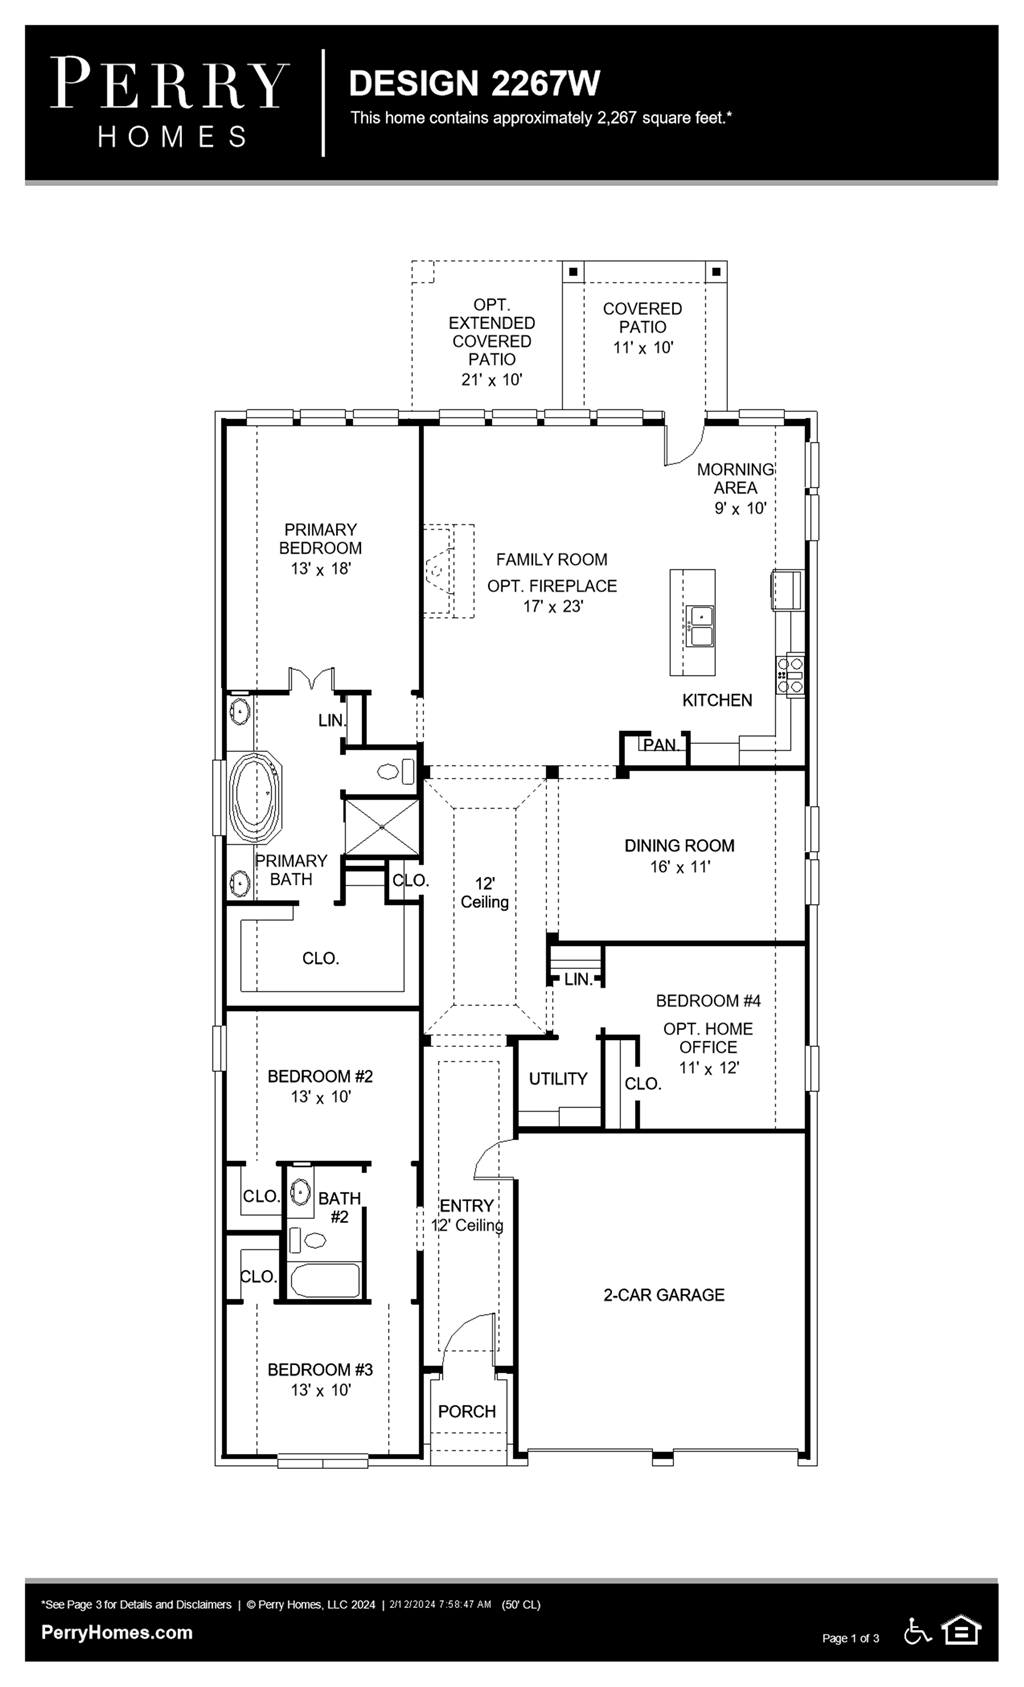 Floor Plan for 2267W